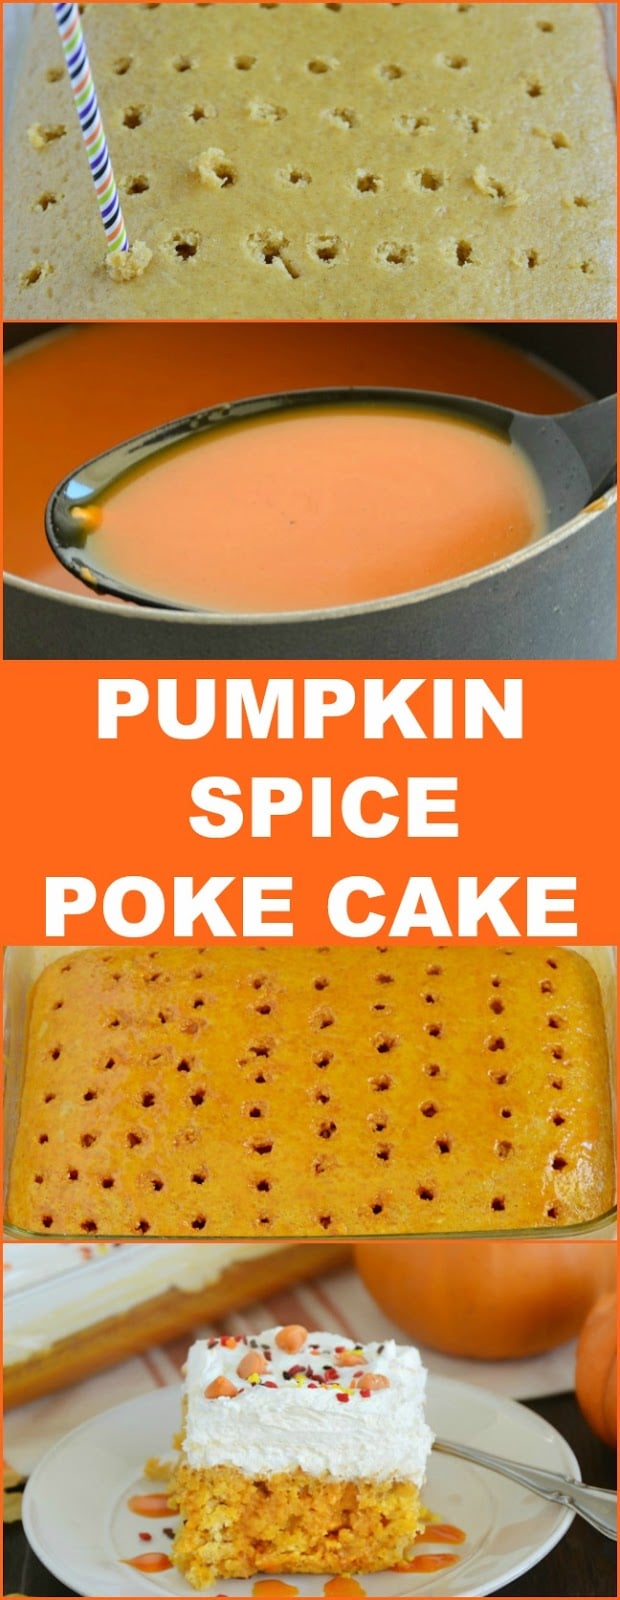 pumpkin-spice-poke-cake%2BCOLLAGE.jpg